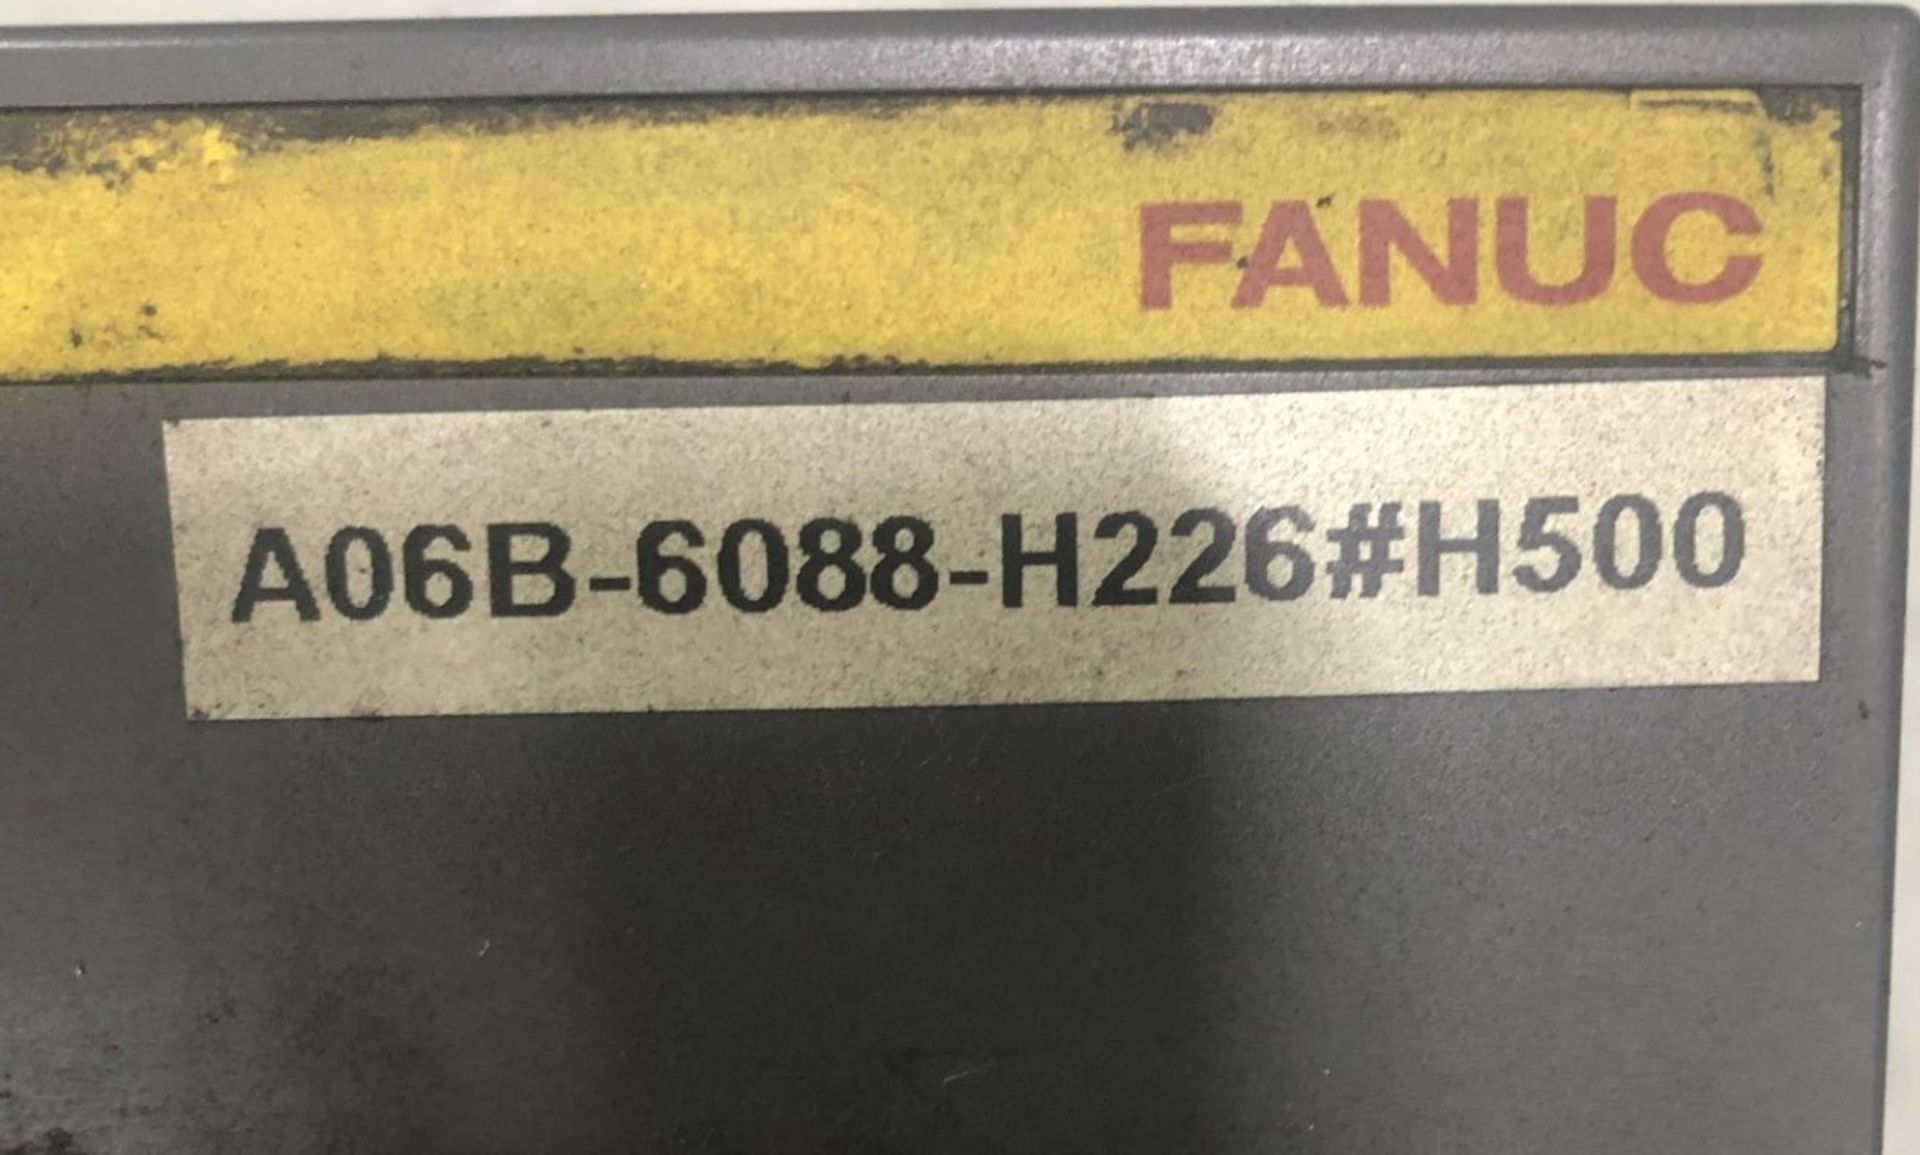 Fanuc Servo Amplifier Module, A06B-6088-H226 #H500 - Image 4 of 4